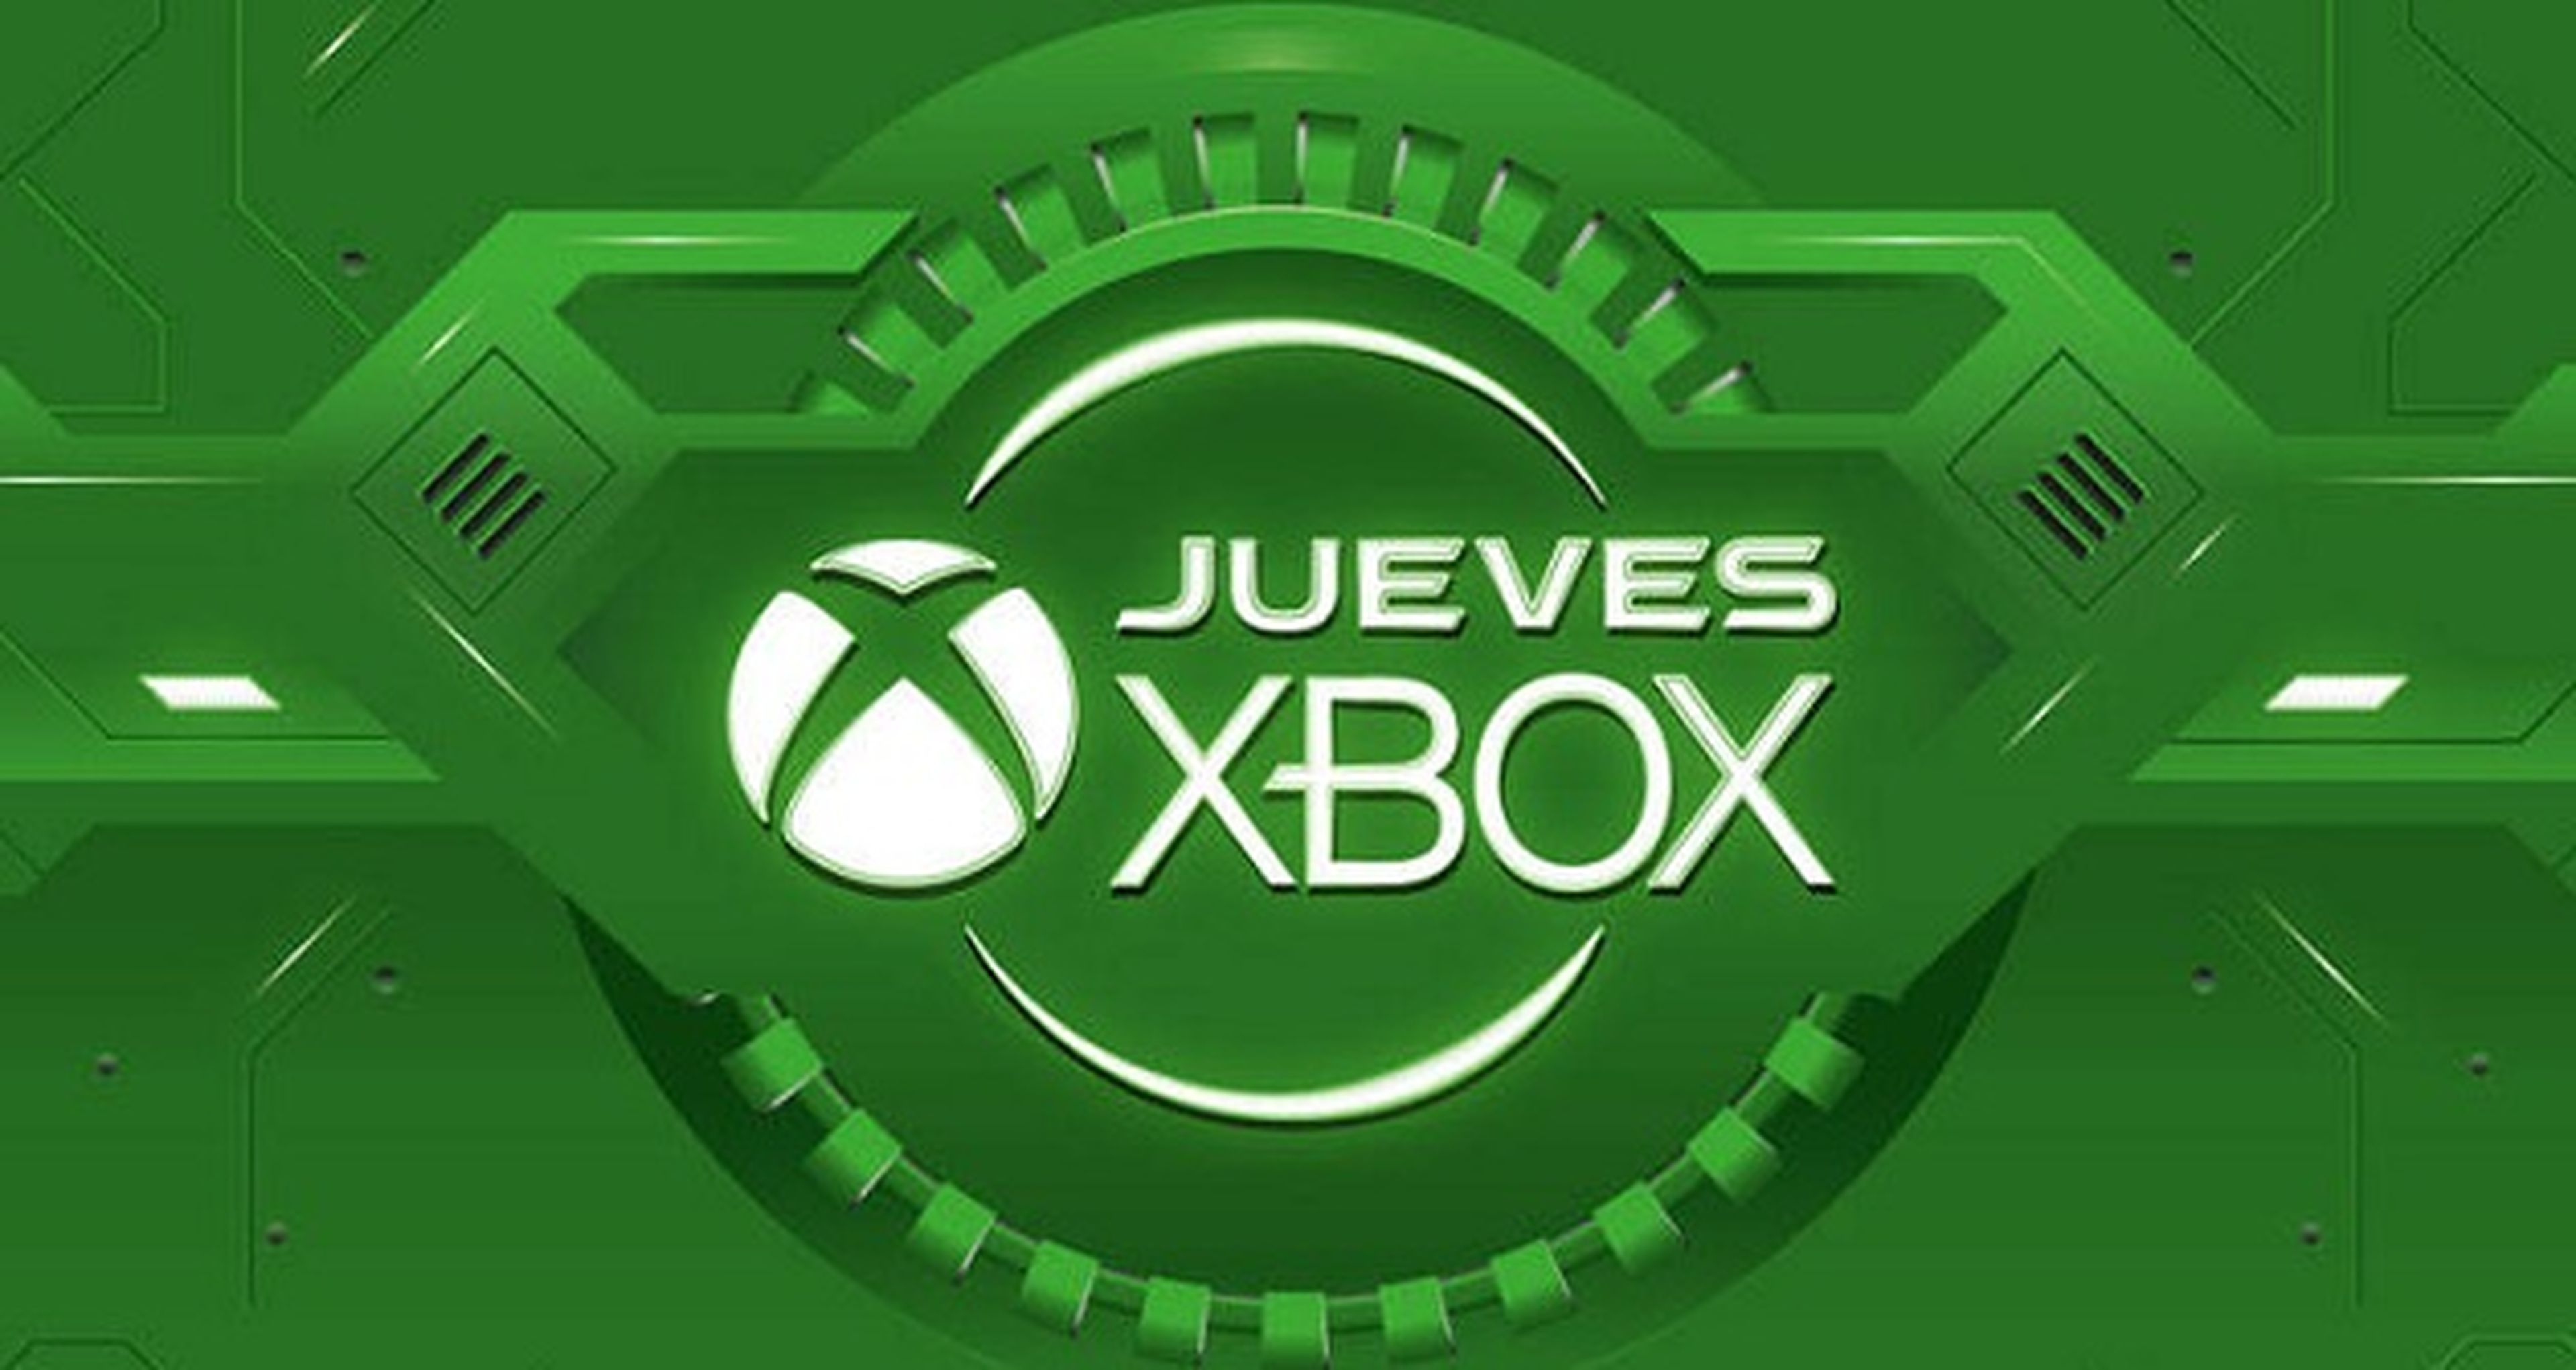 Jueves Xbox en GAME: novena semana de ofertas